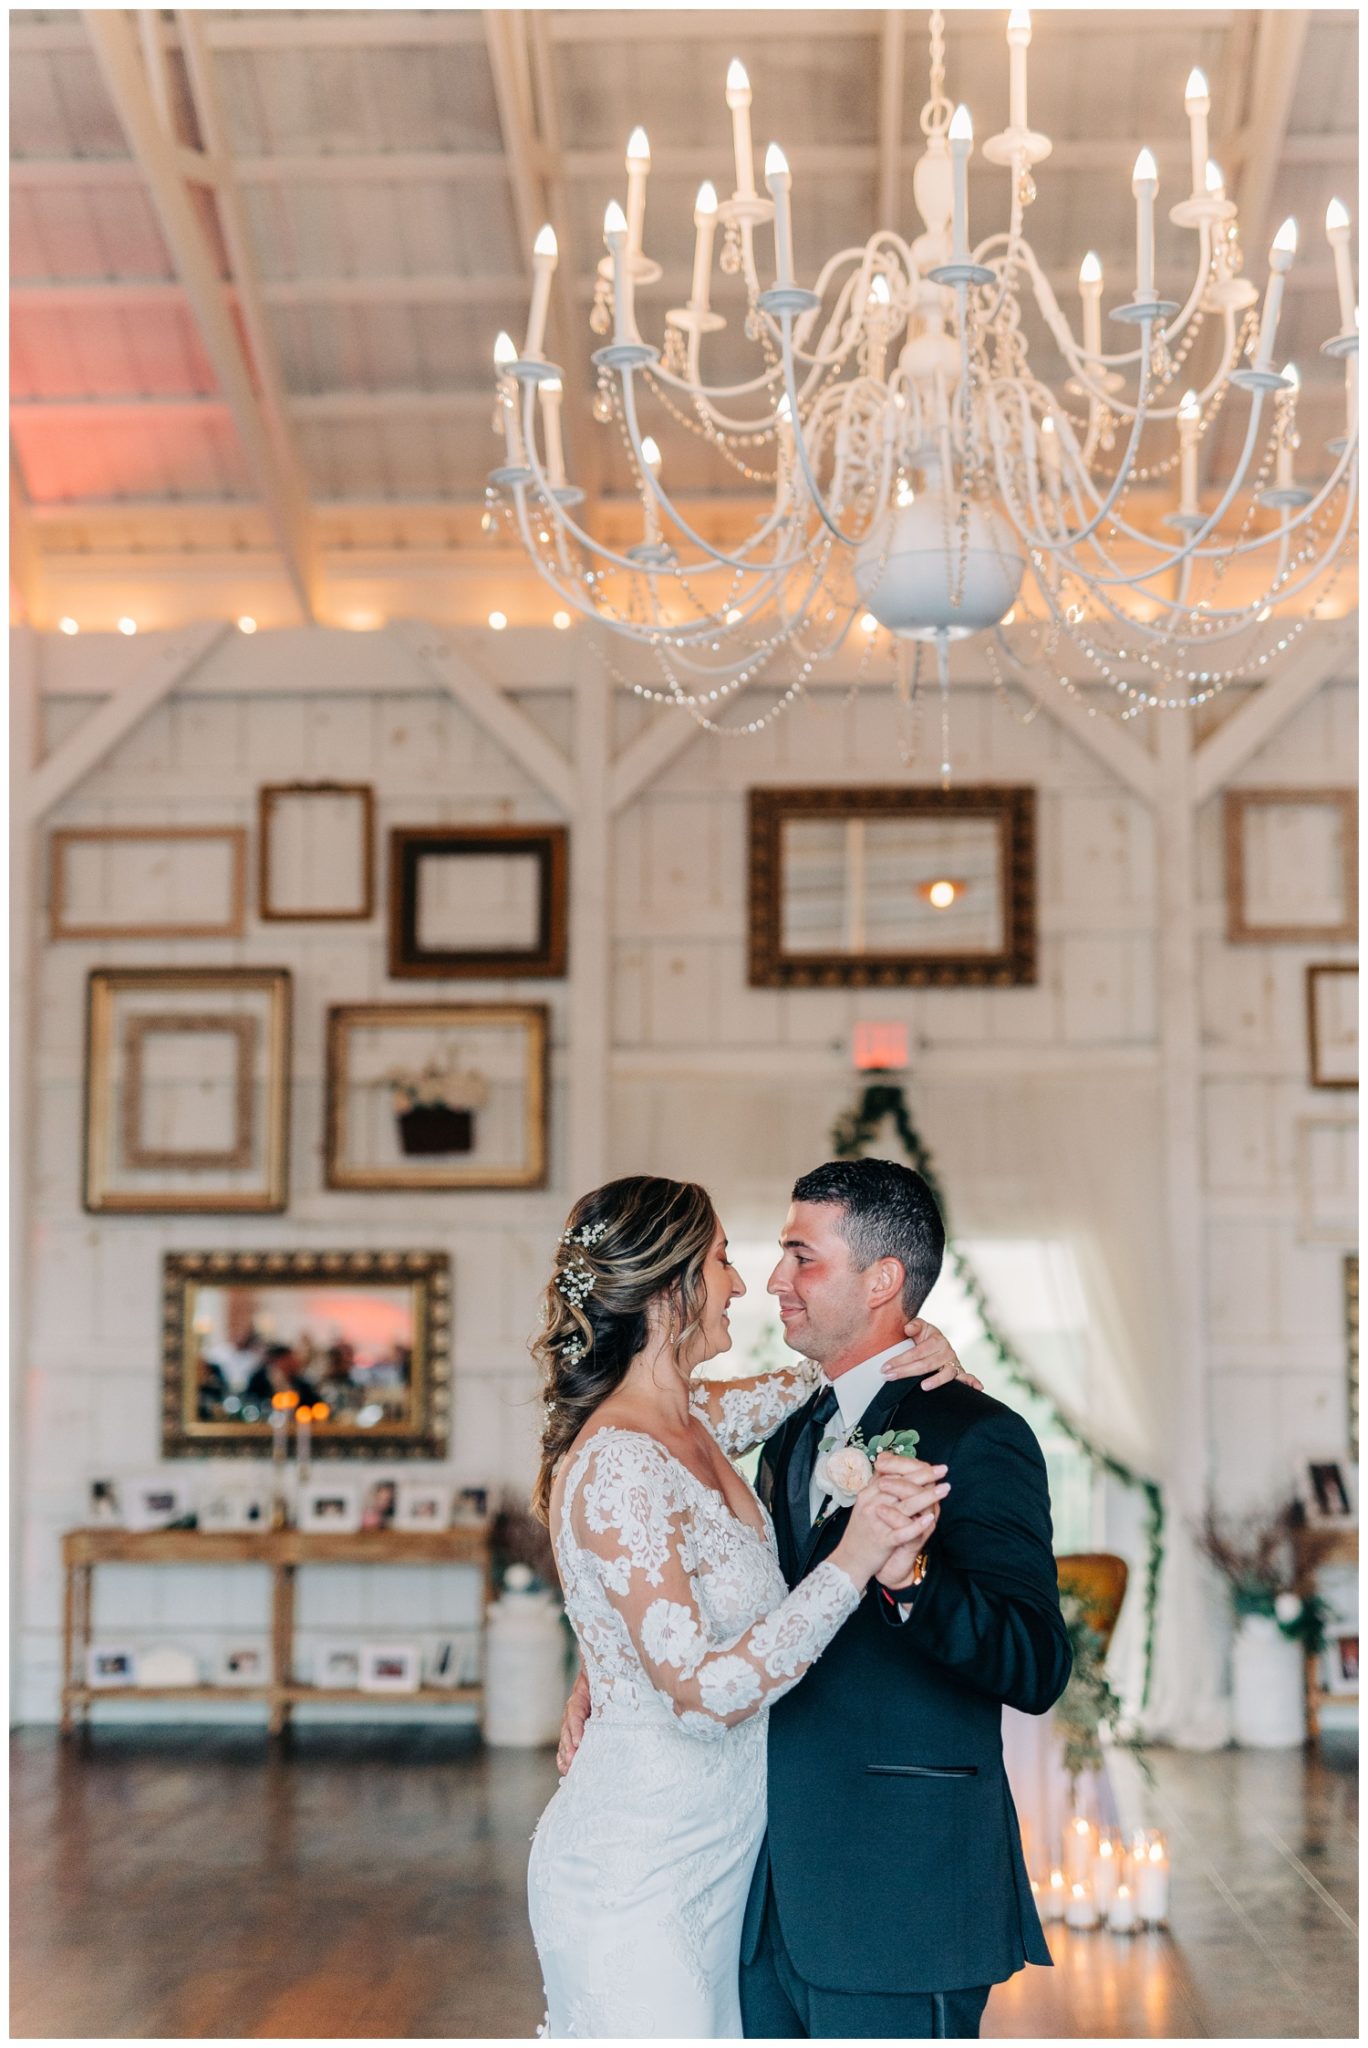 East Coast Weddings,Fine Art New York Wedding Photographer- Hannah Bryerton Photography,Maryland Wedding Venue,The White Barn at Lucas Farm,White Barn Event,